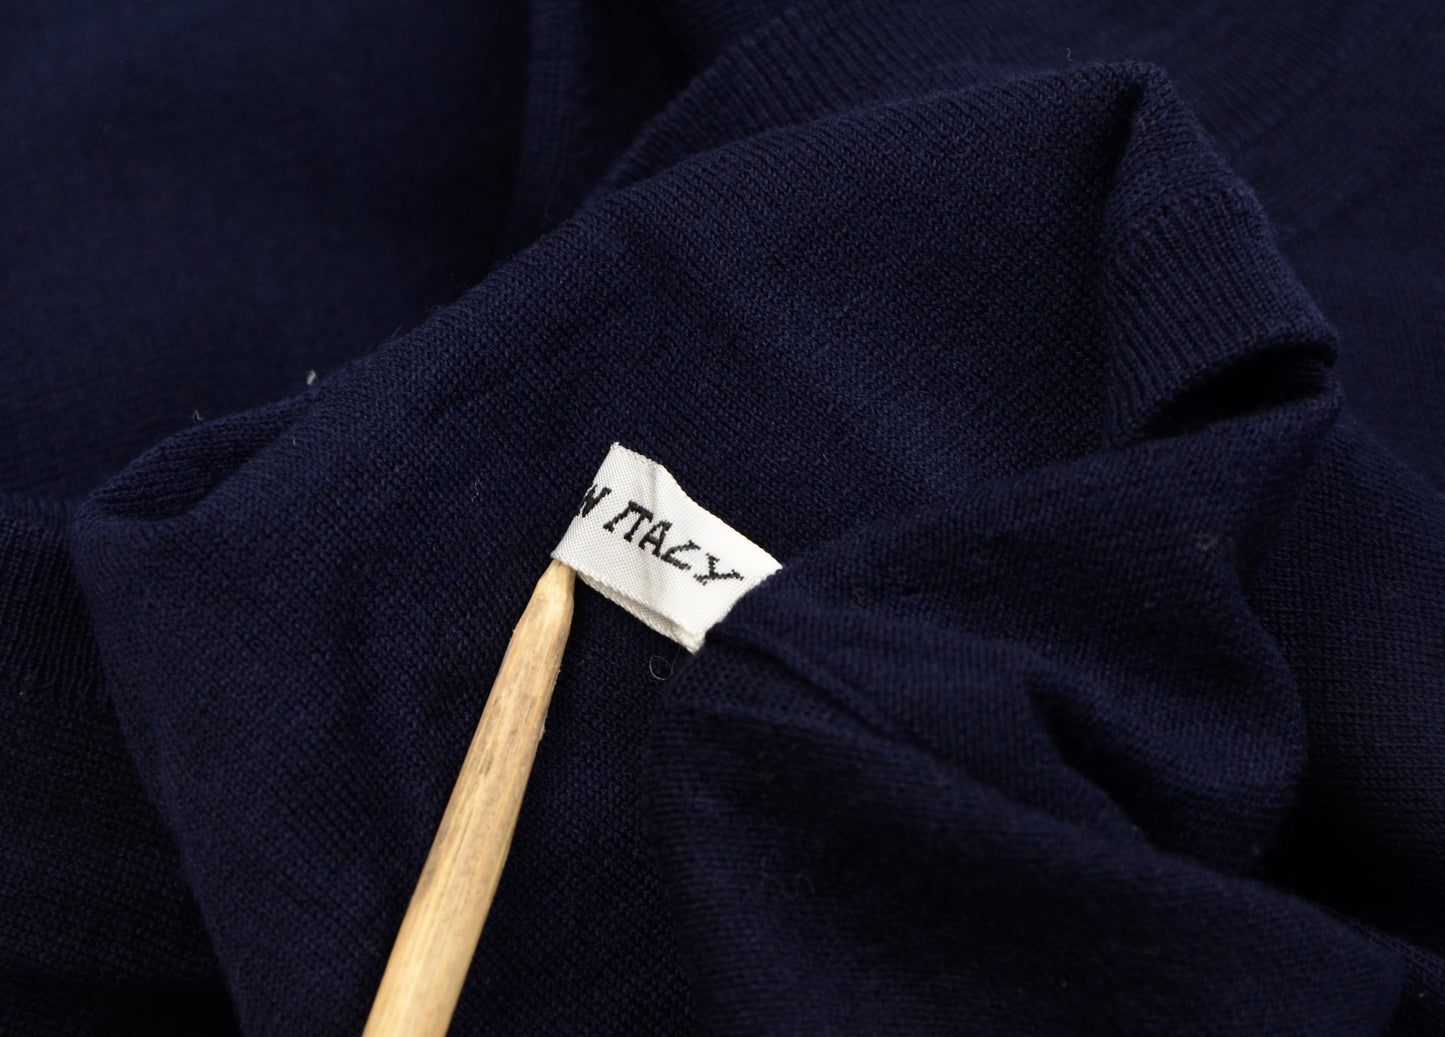 Knize Wien V-Neck Wool Sweater Vest 46 - Navy